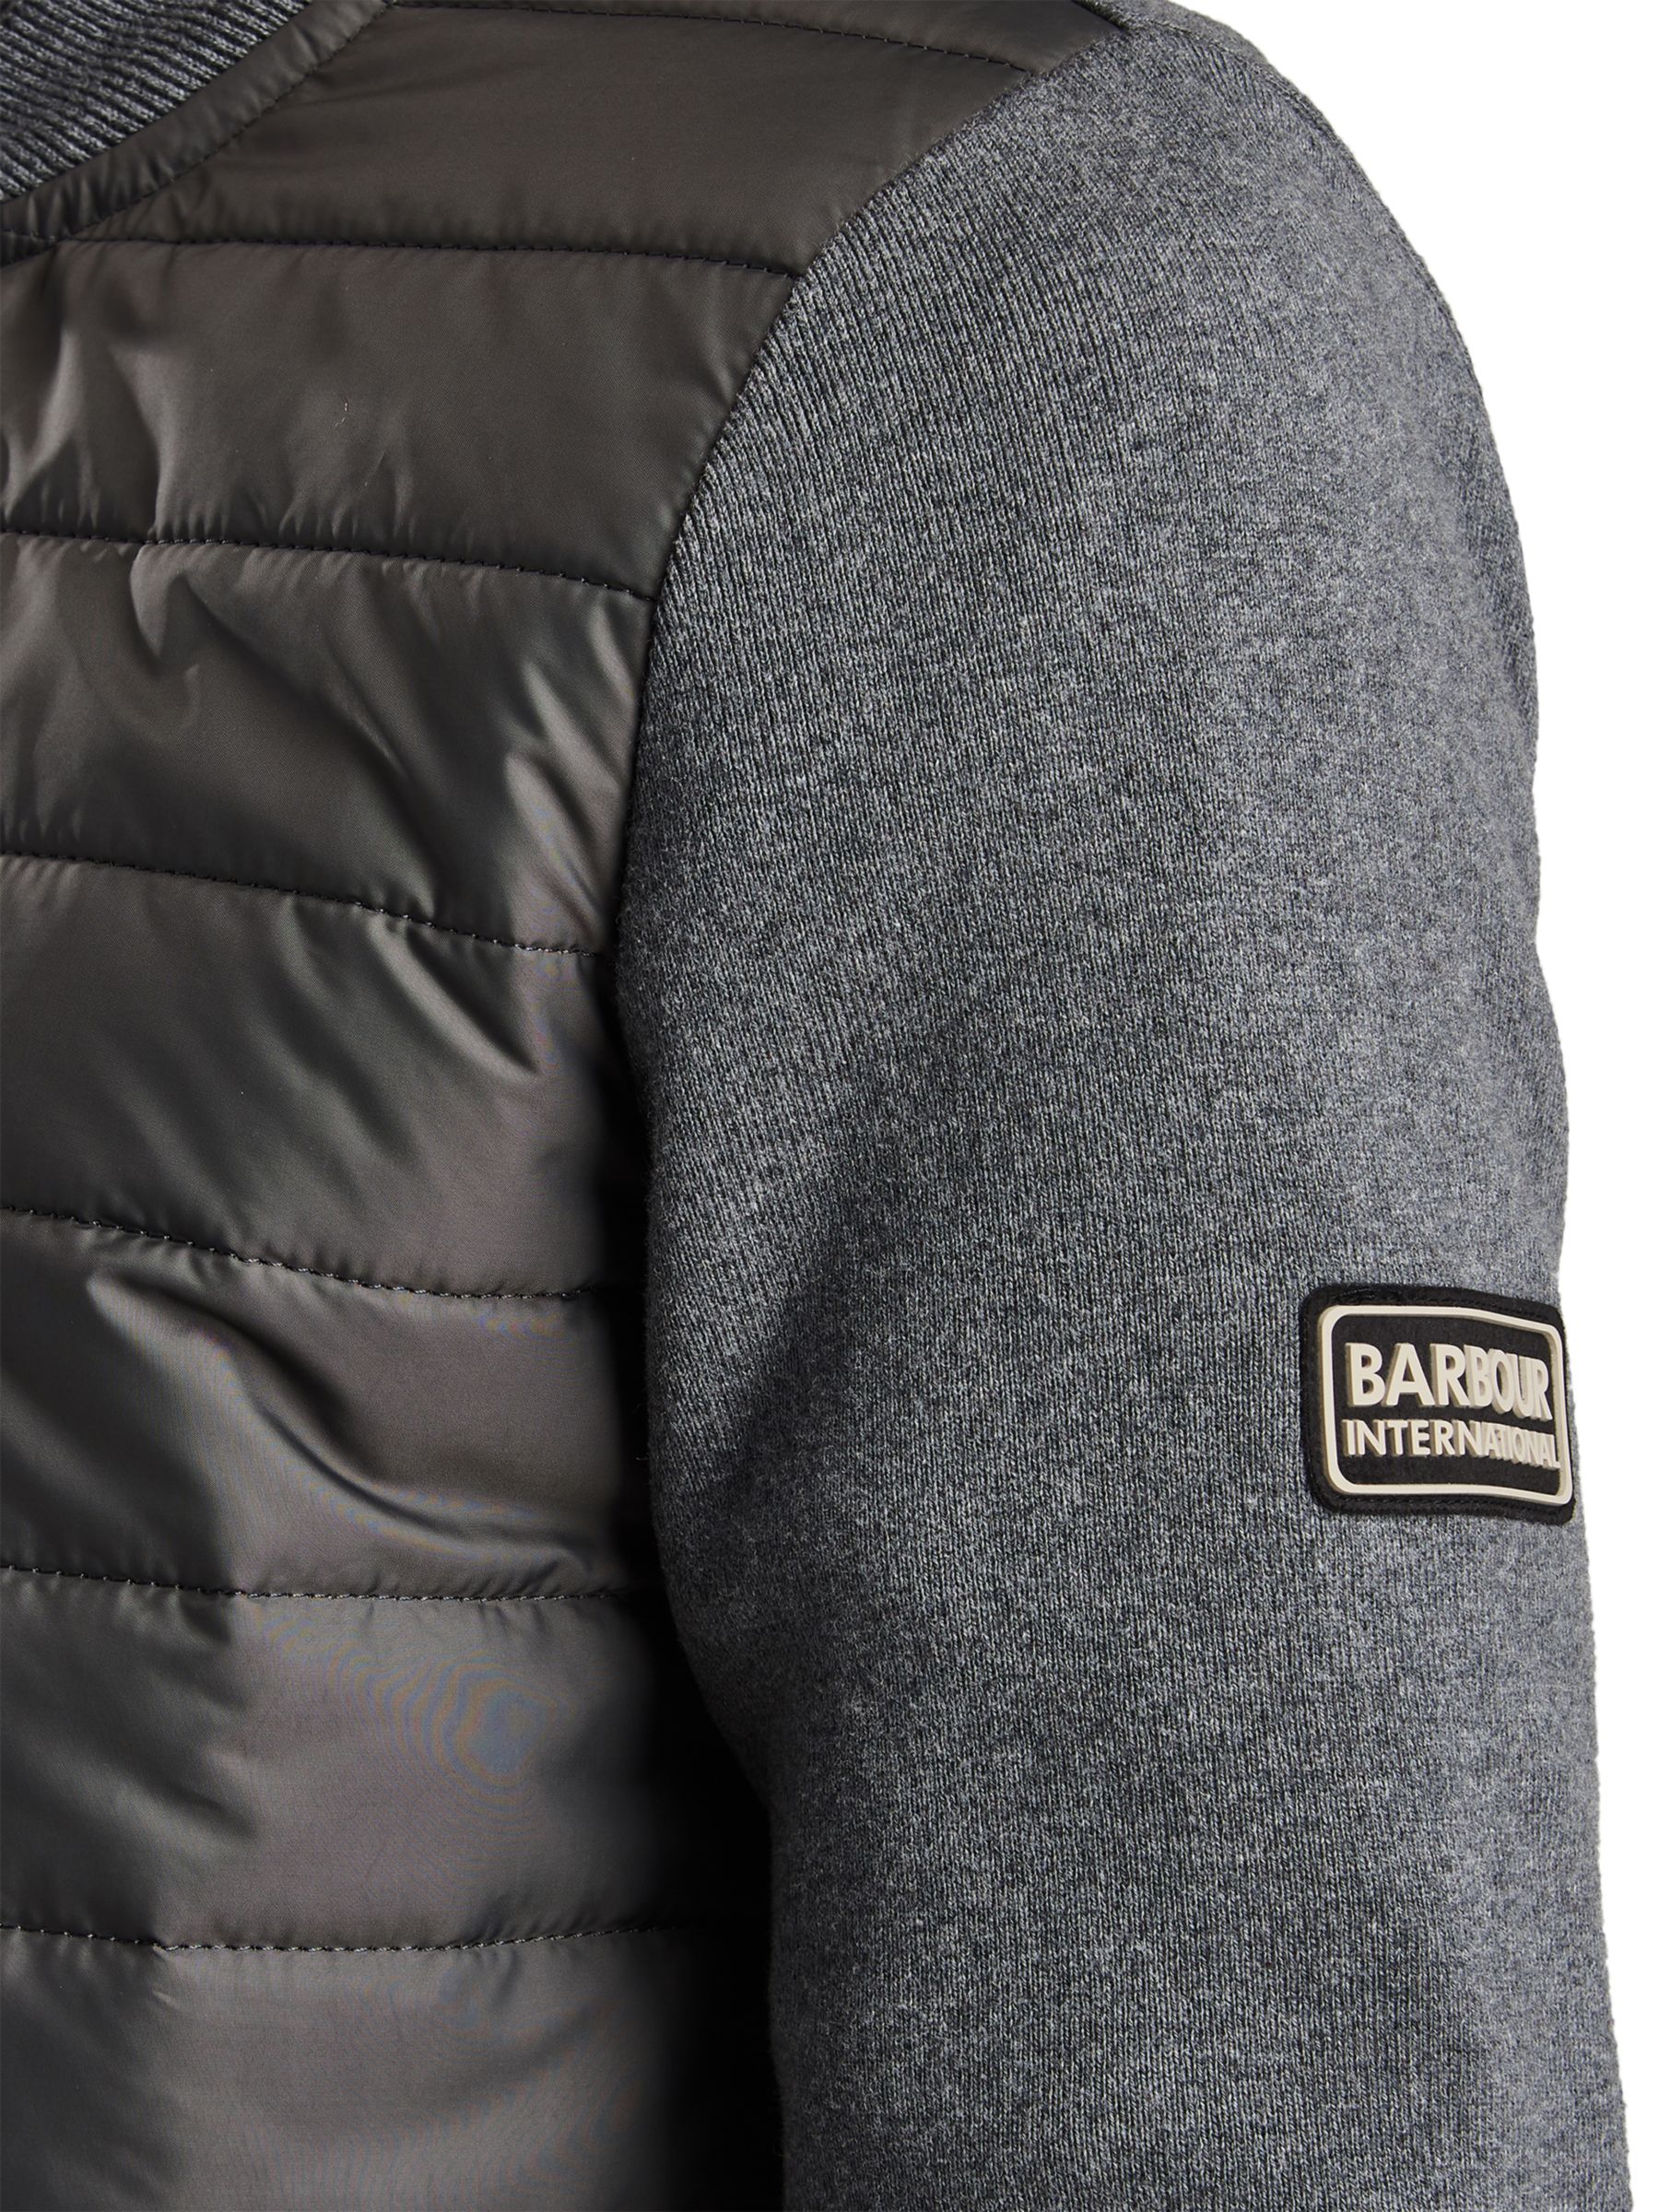 barbour international baffle zip through jacket